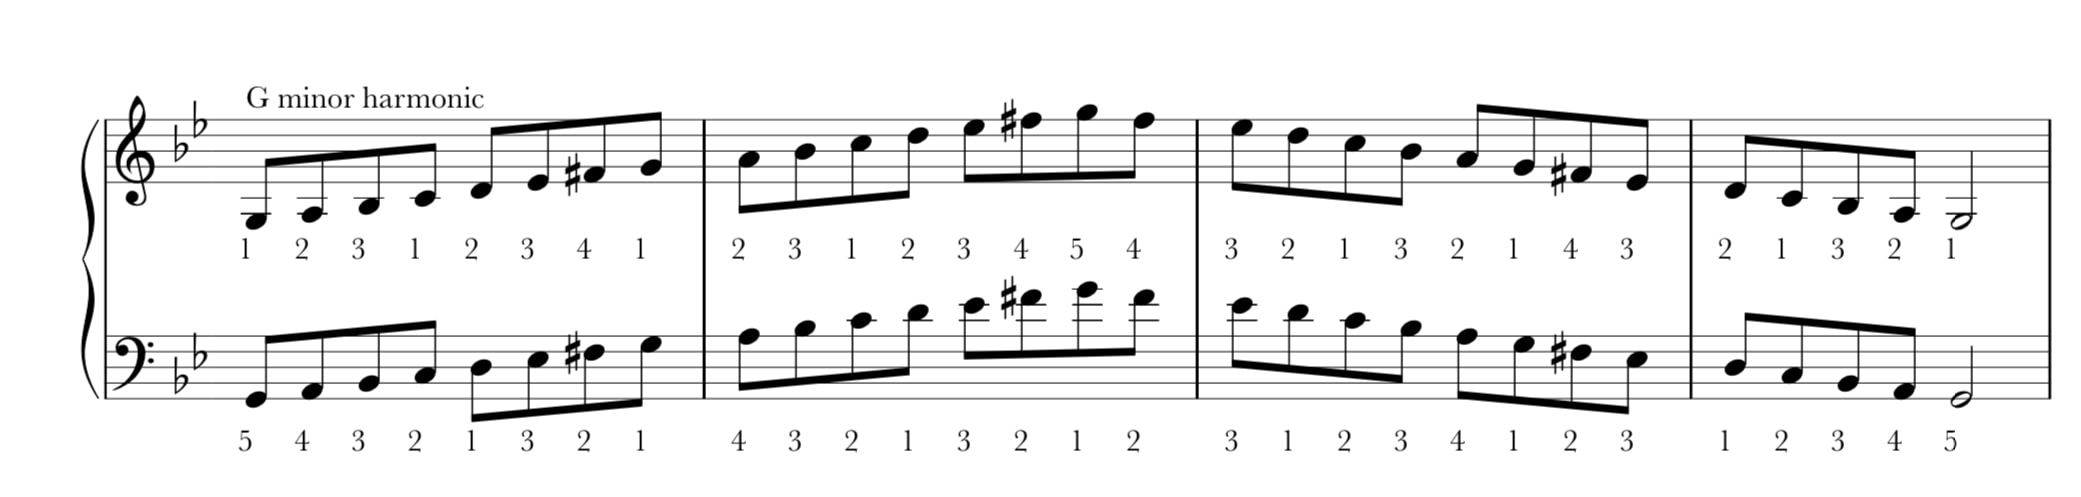 G harmonic minor scale